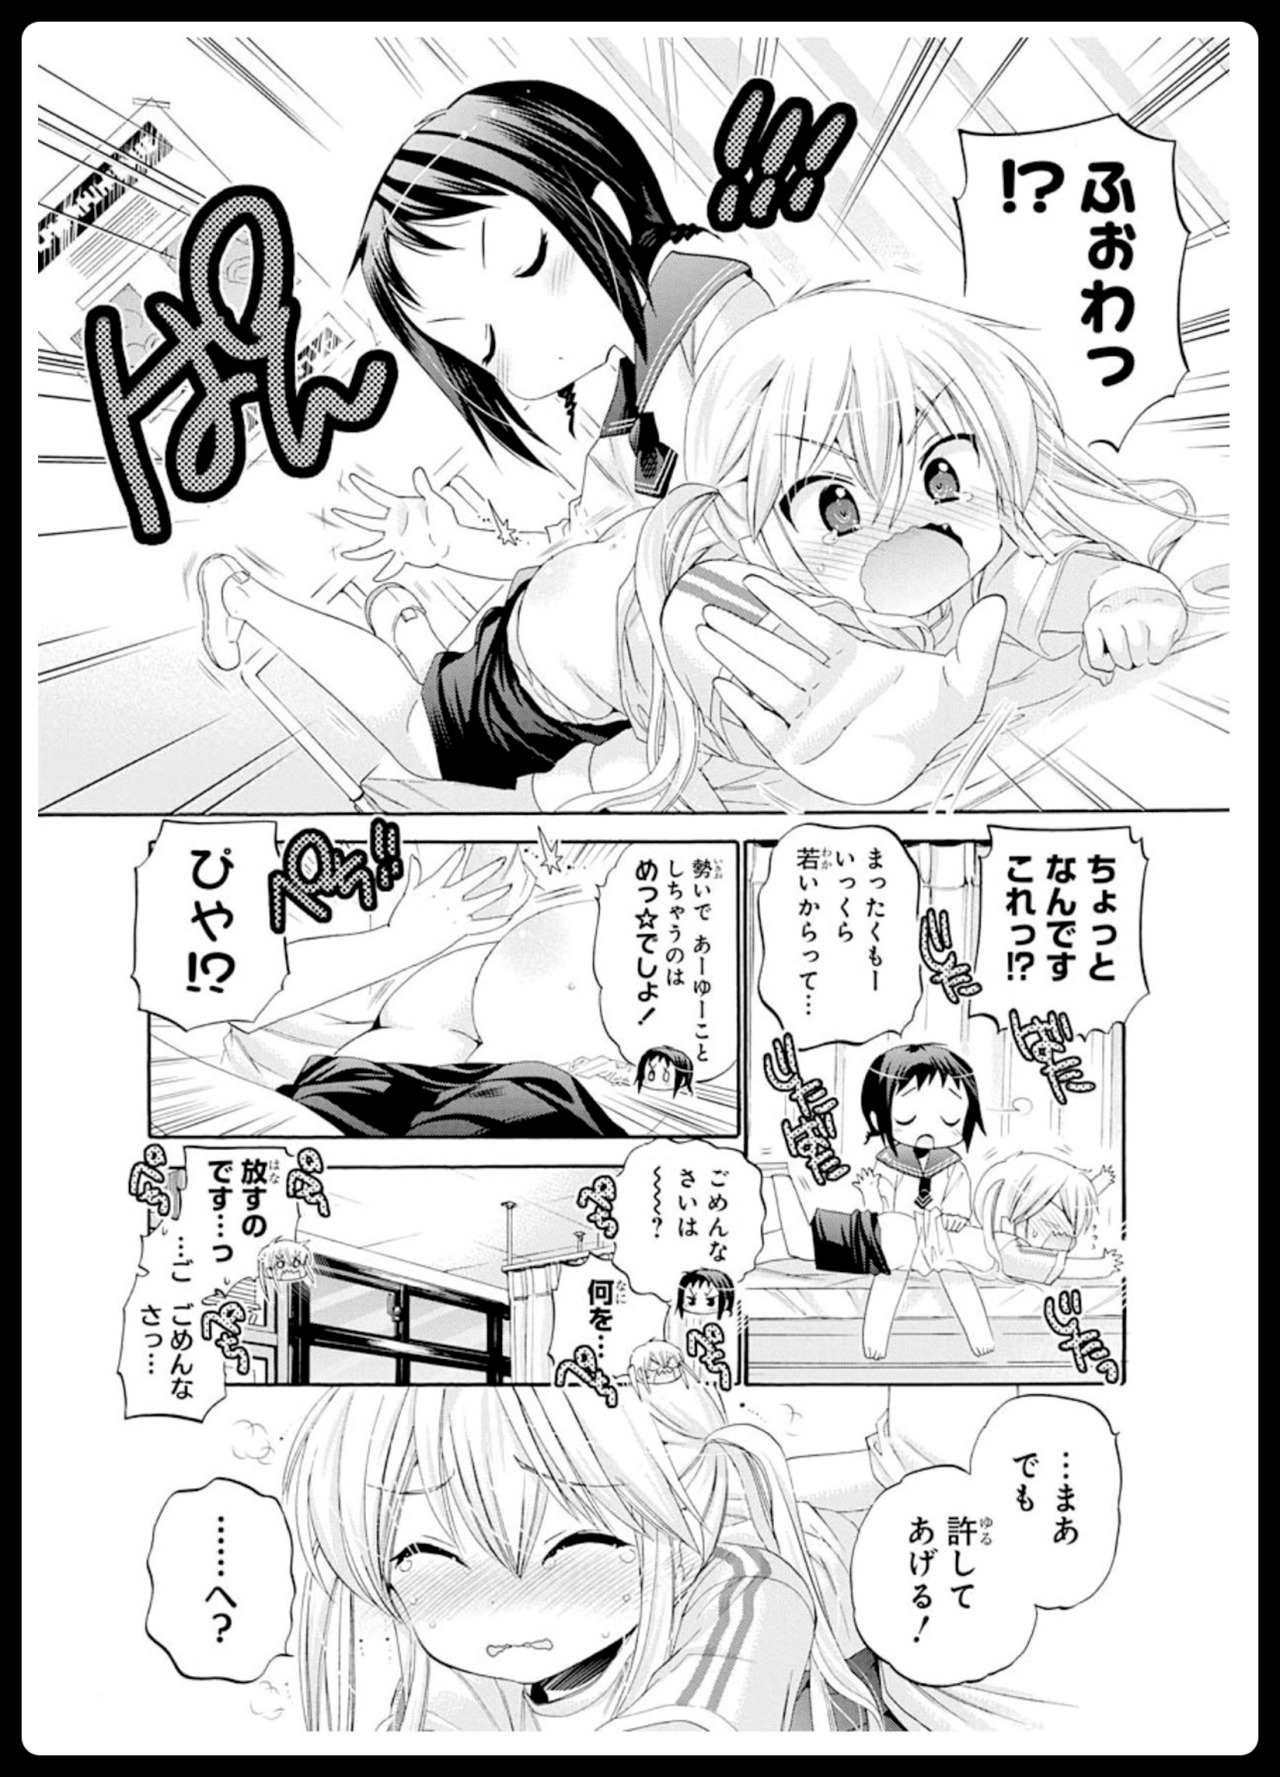 Spanking Manga